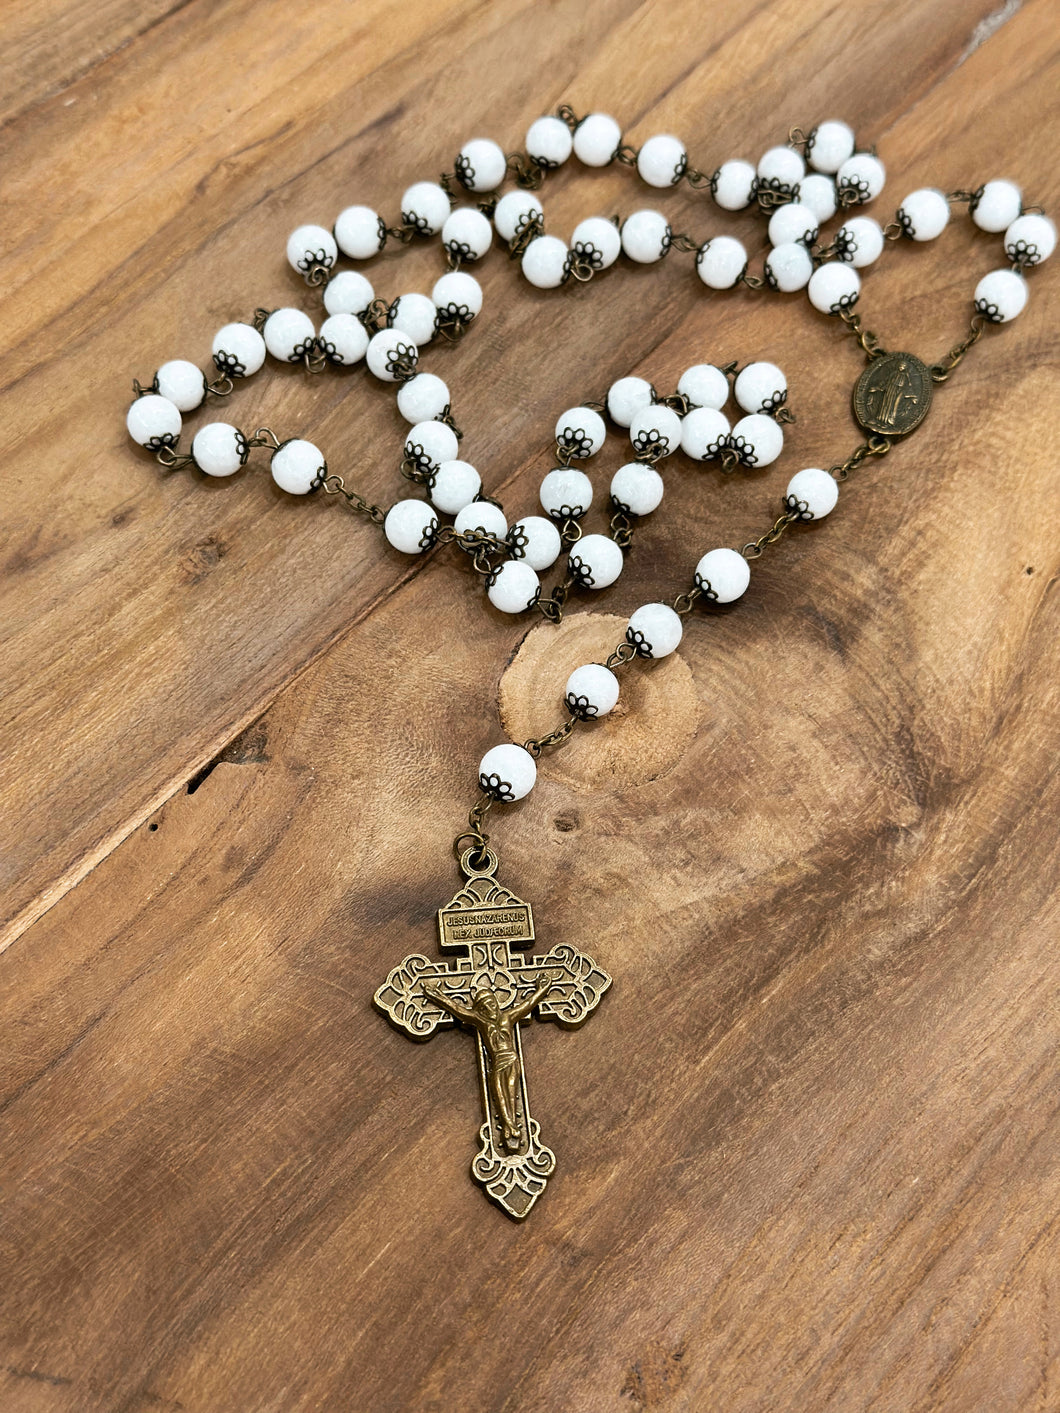 Vintage Stone Rosary Beads